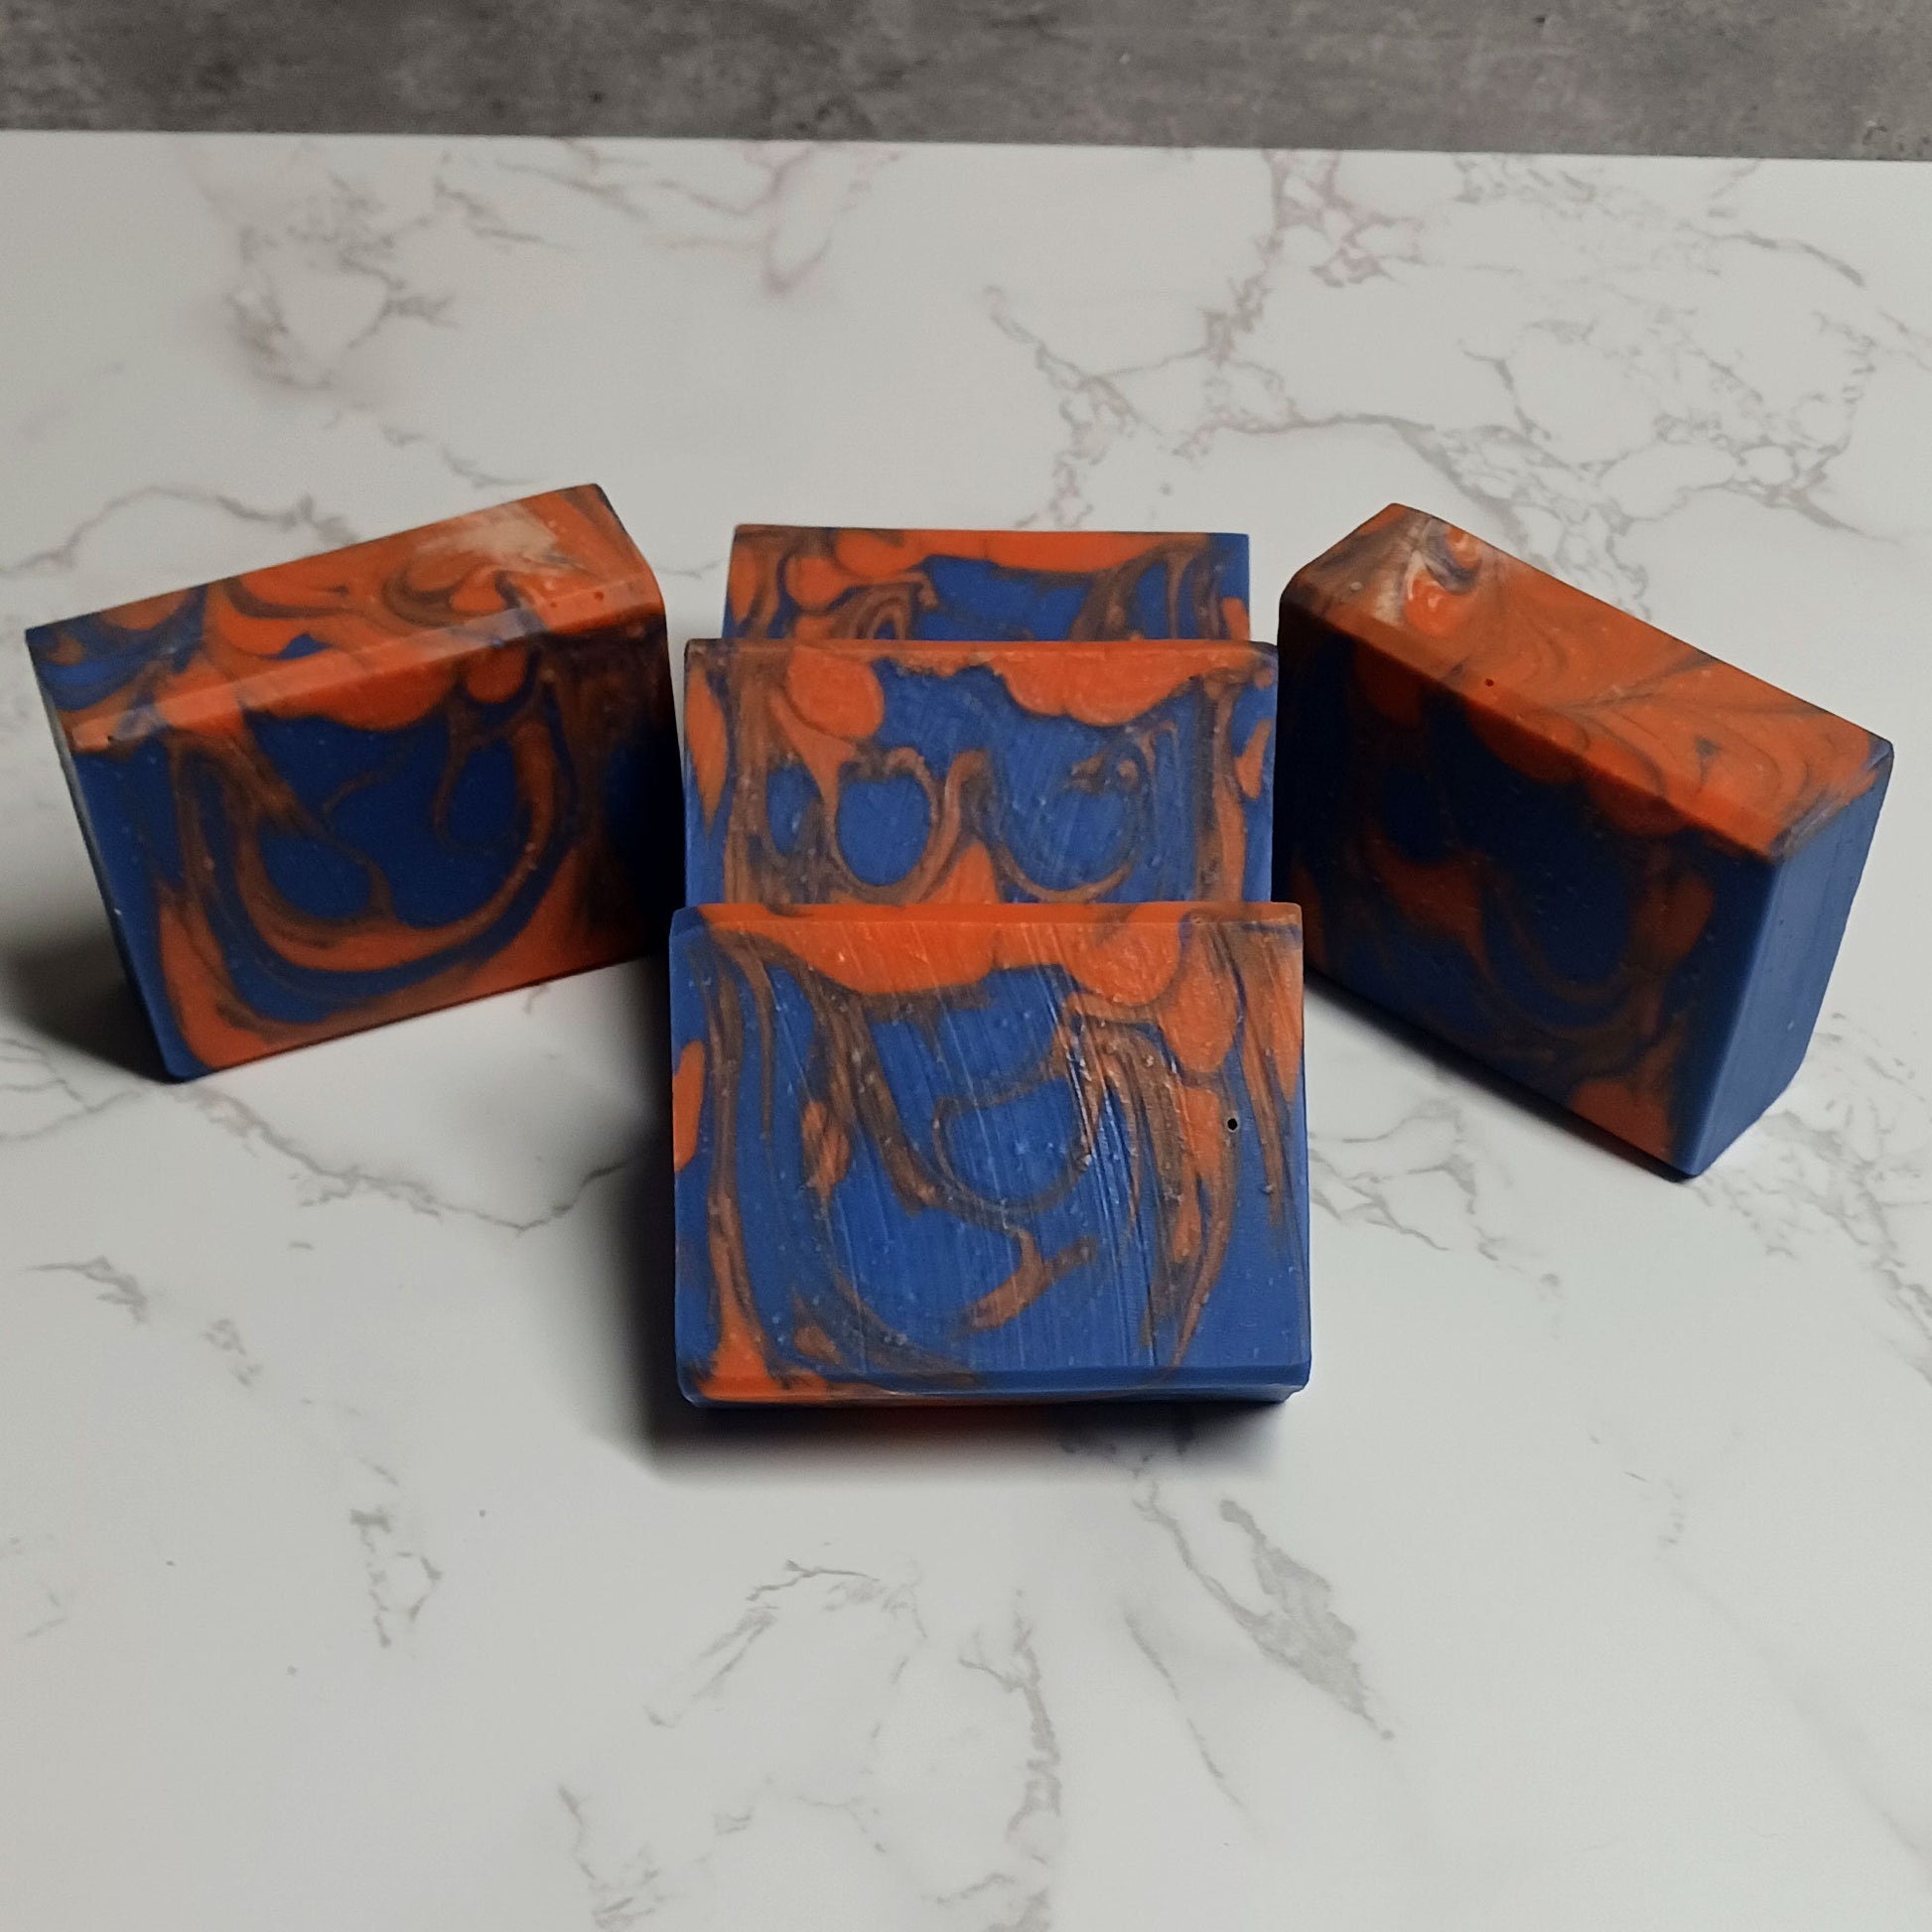 Temptation for men Handmade Bar Soap